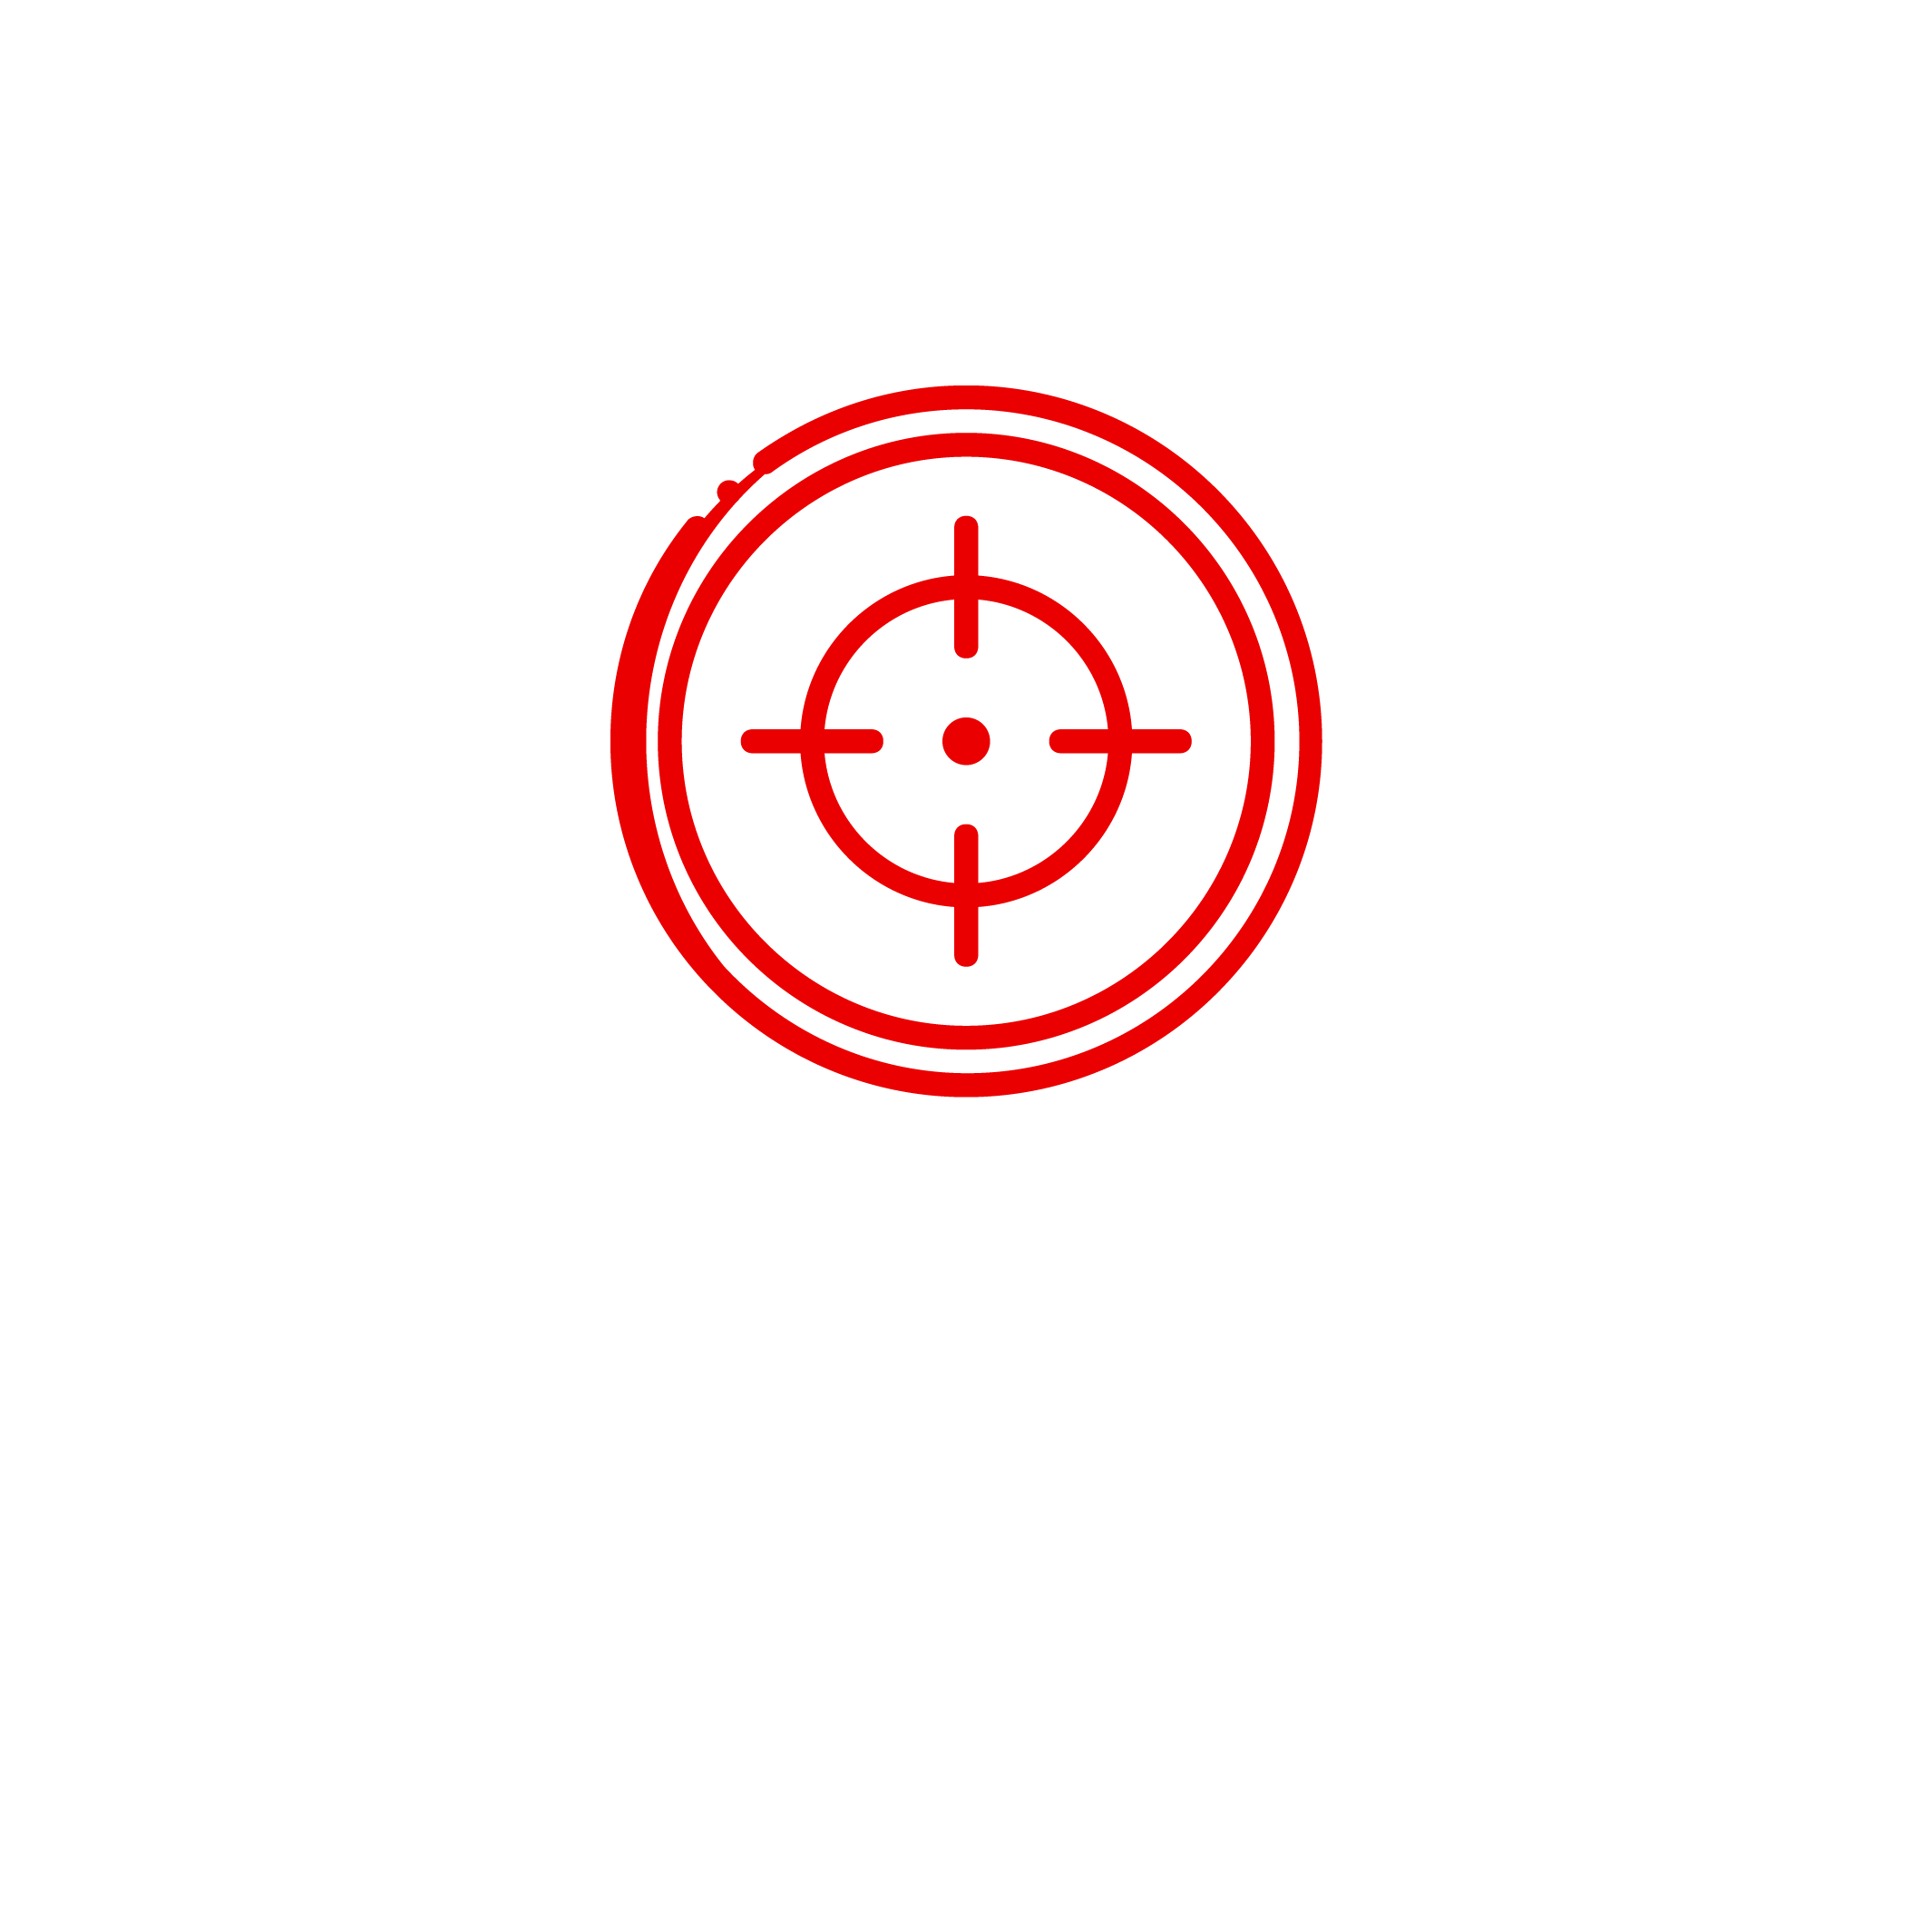 Precision targeting